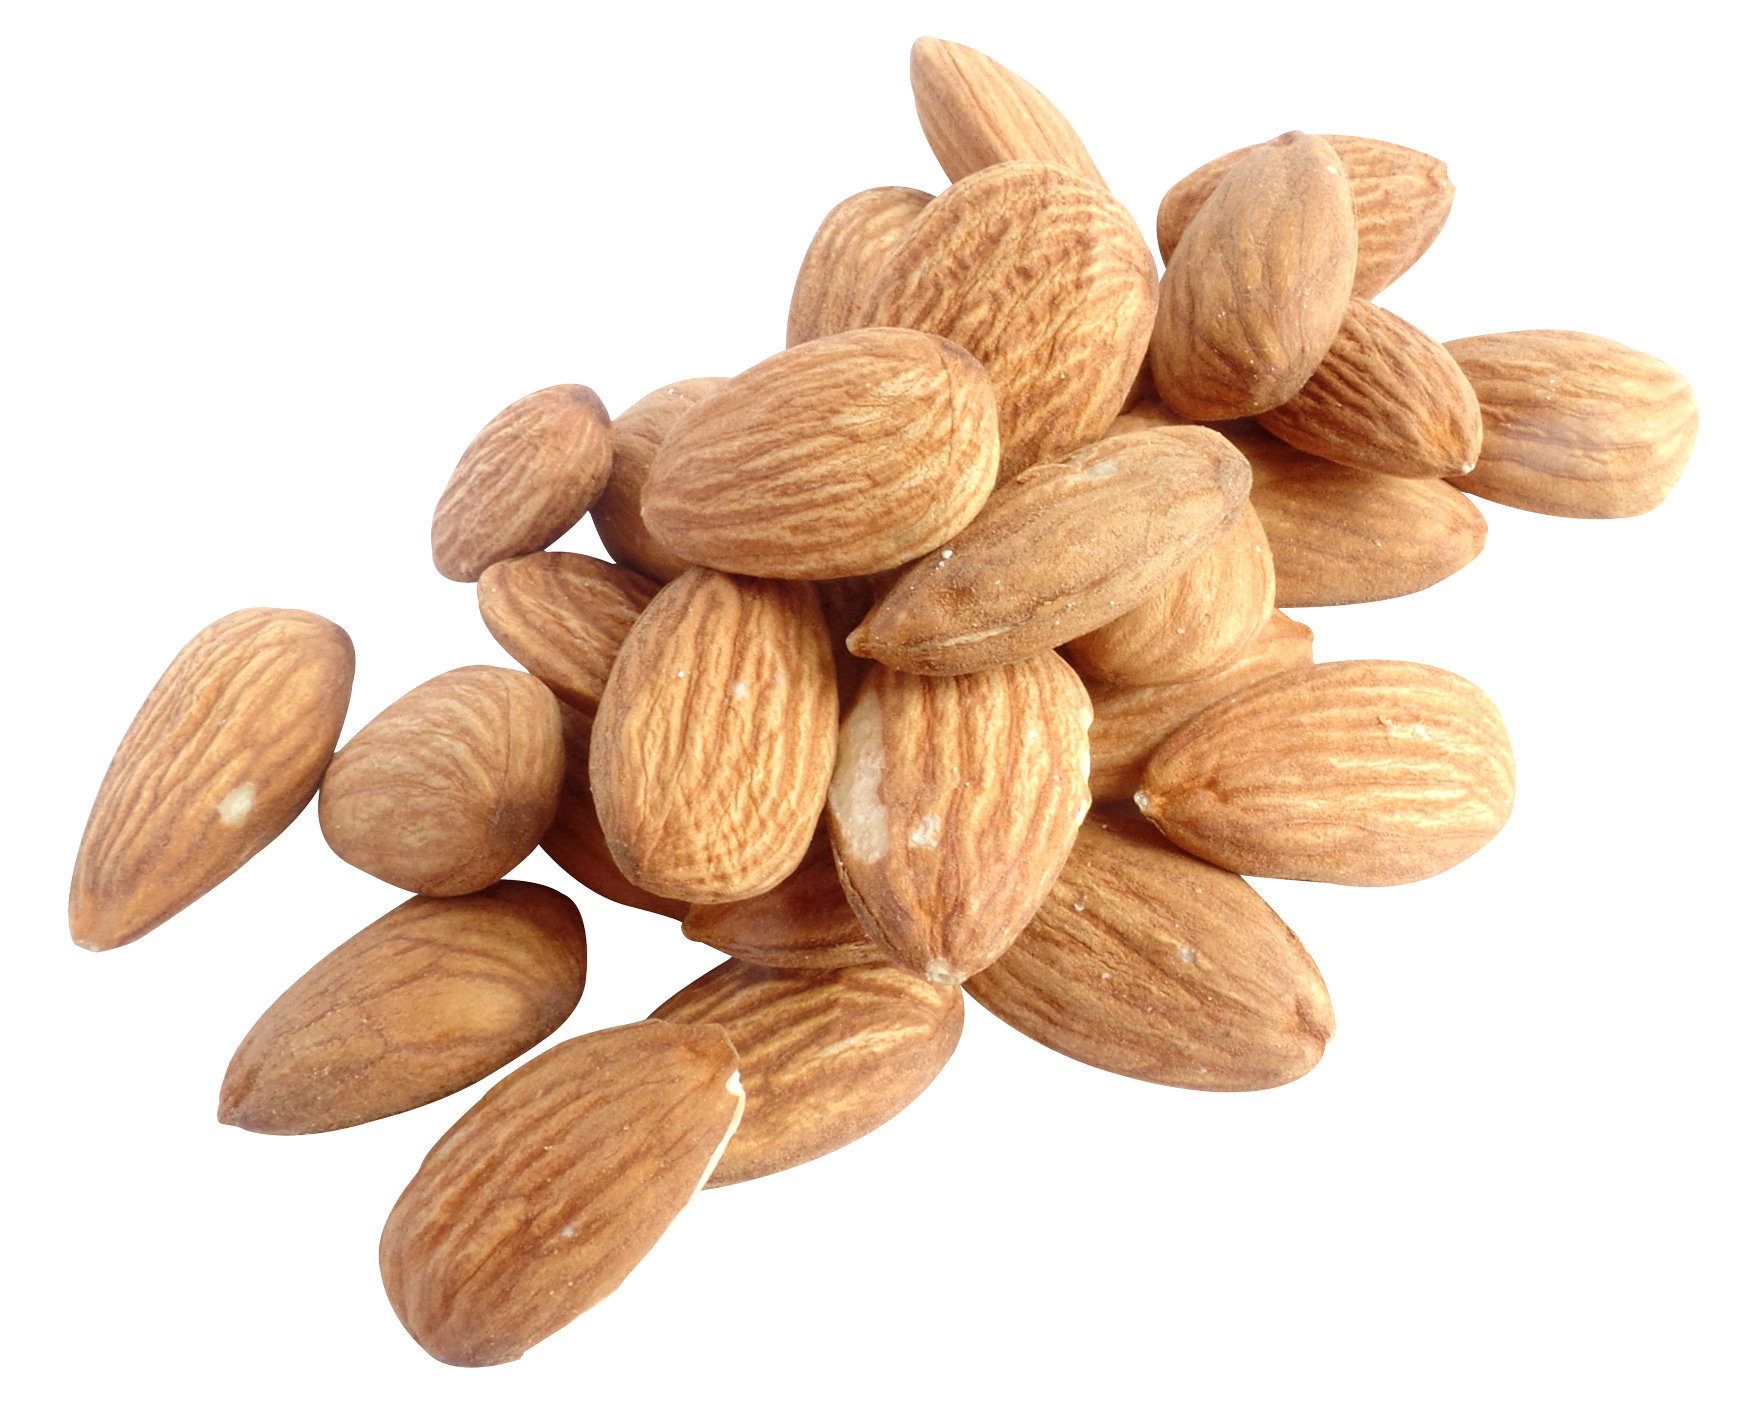 Nut Almond Free Download Image PNG Image